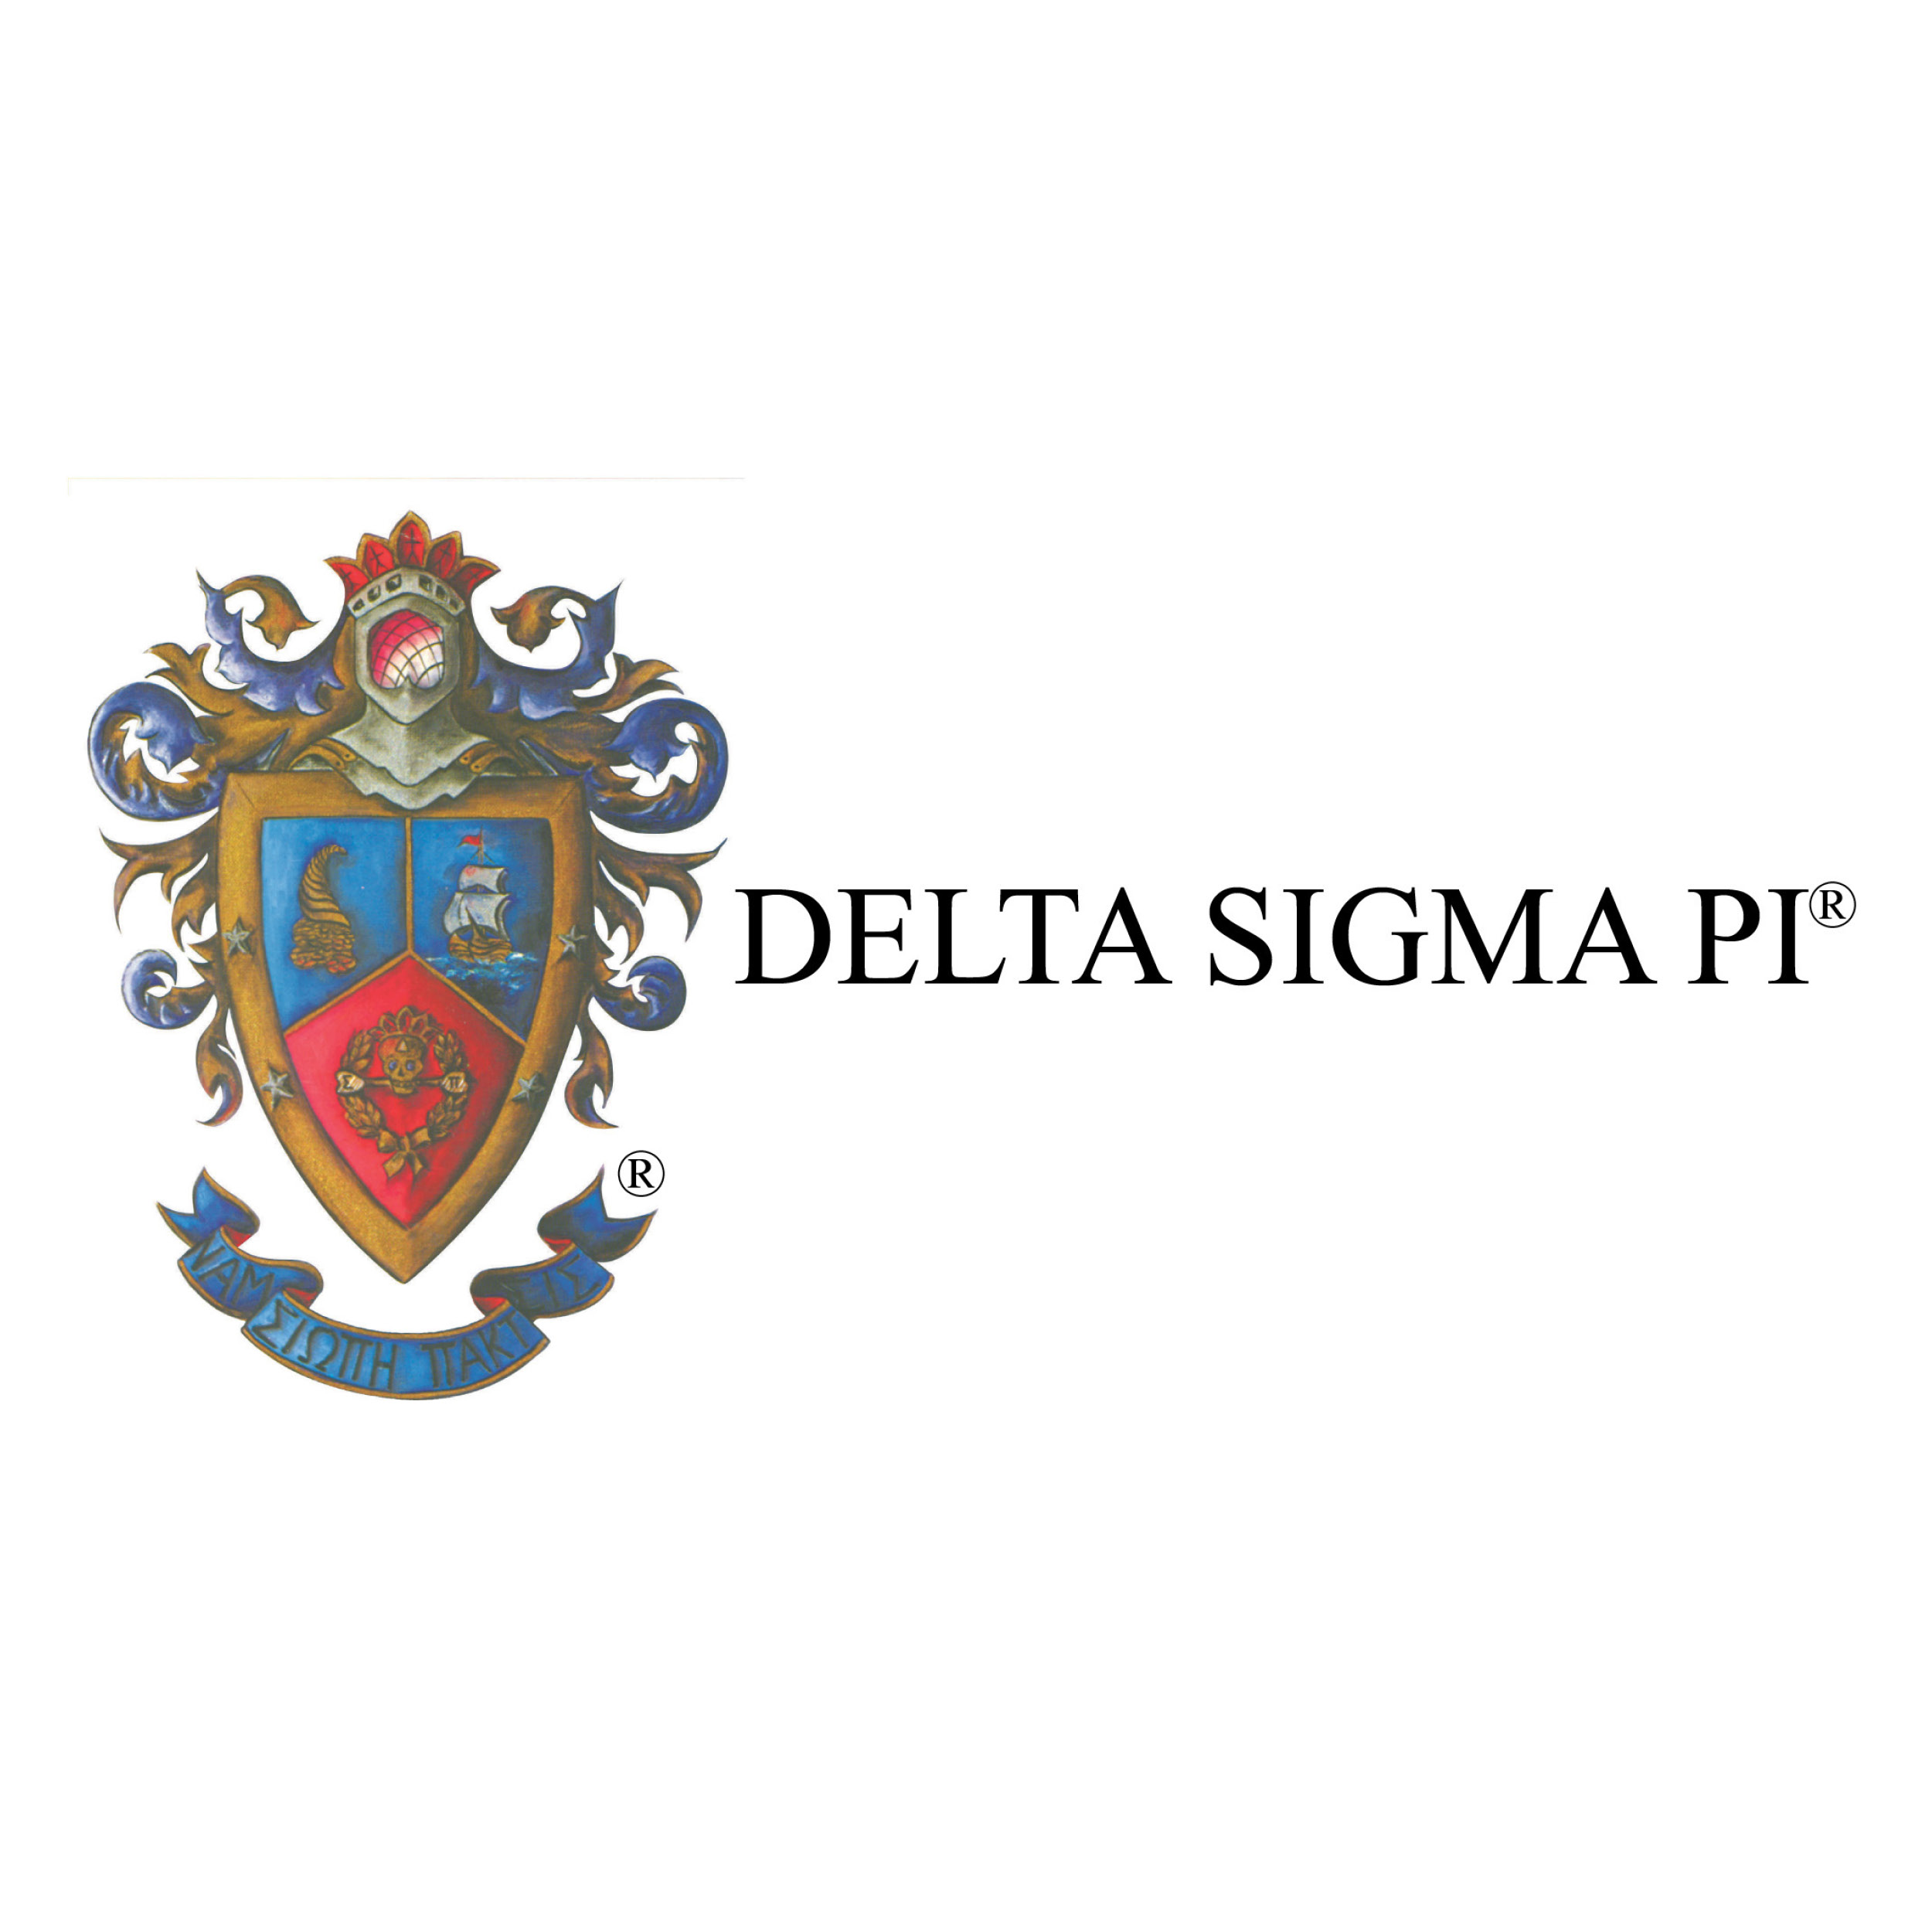 Delta Sigma Pi logo